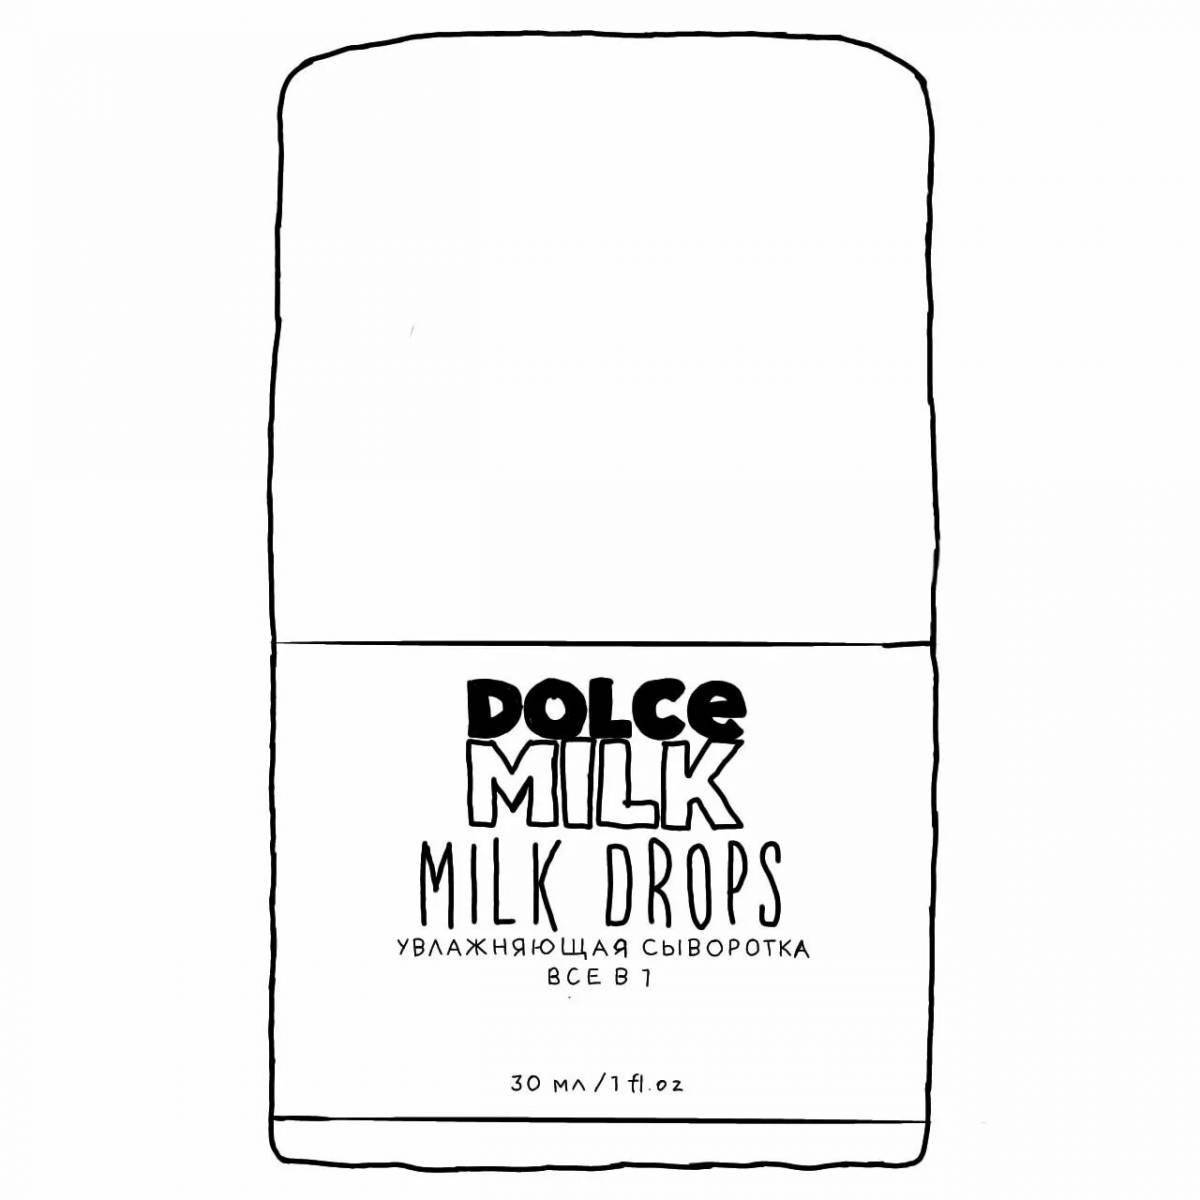 Adorable dolce milk cream coloring book